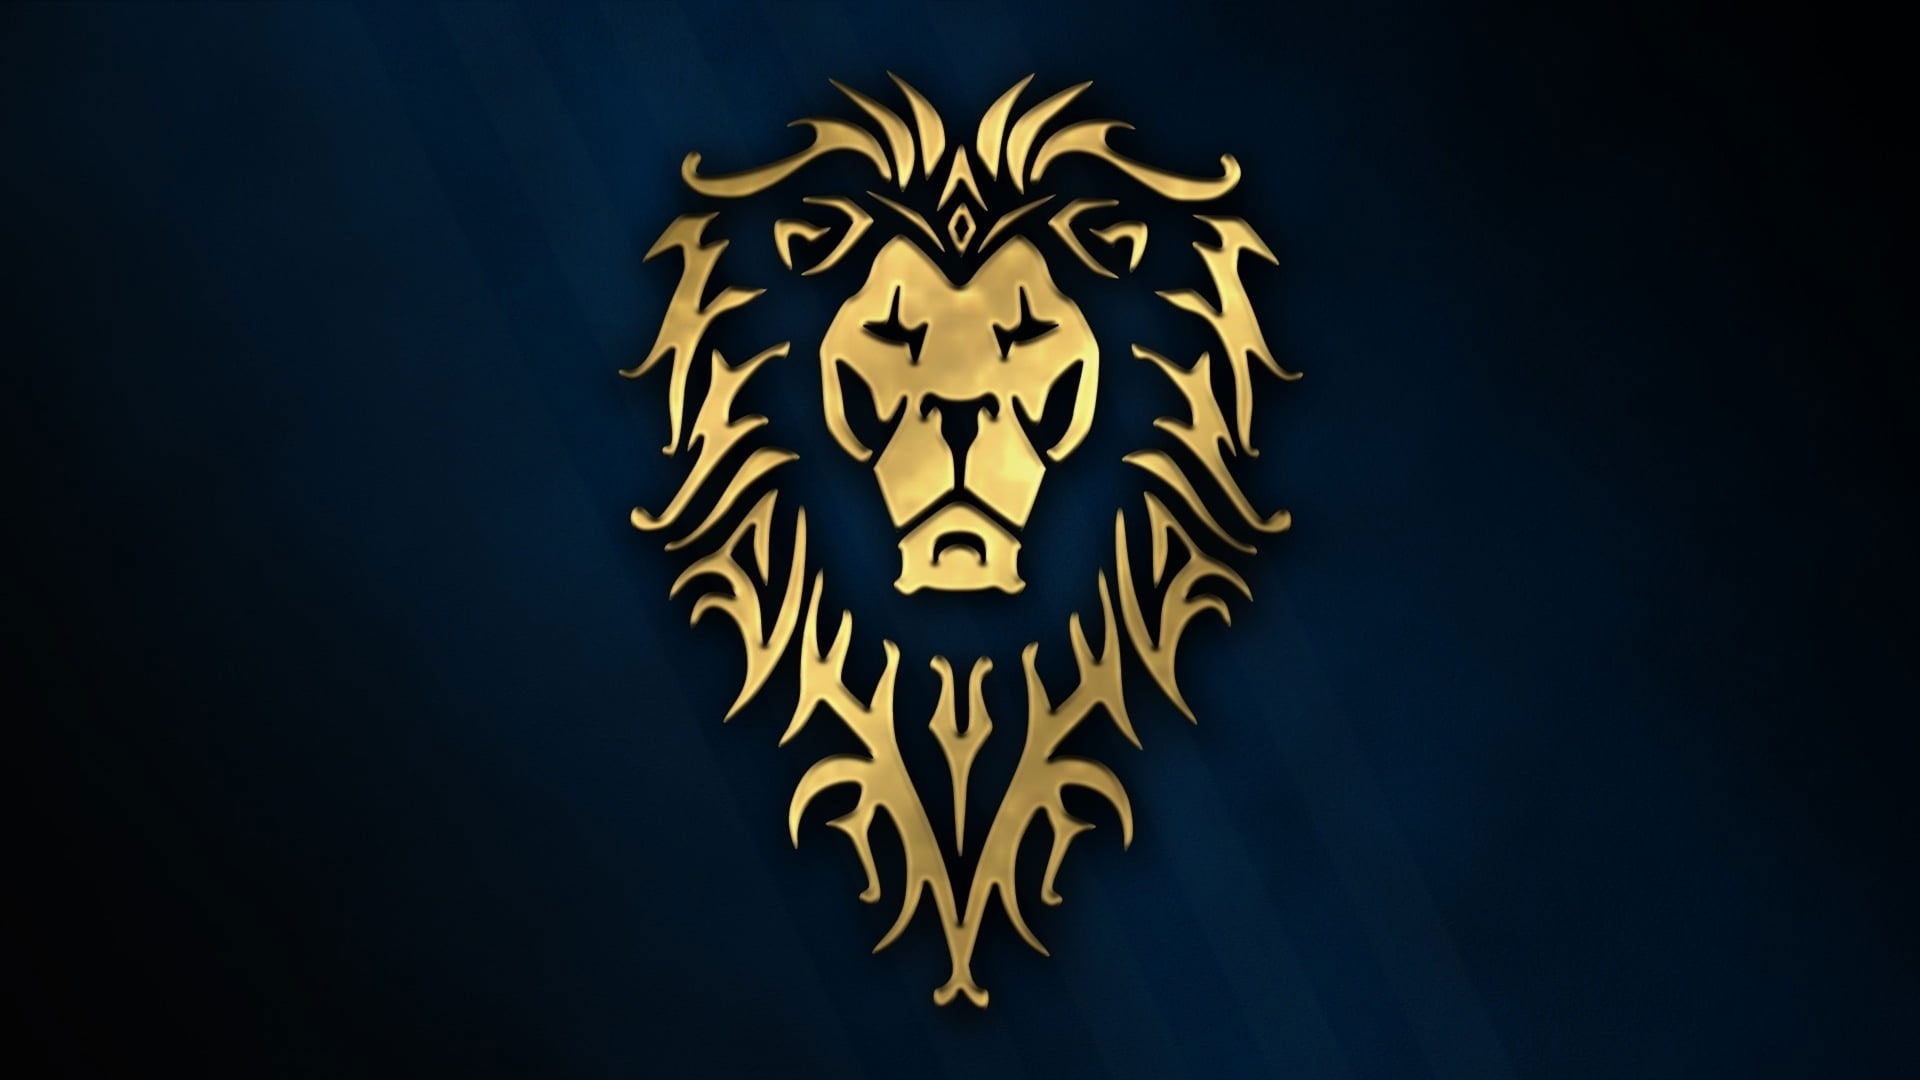 Gold lion logo wallpaper, cinema, golden, game, Warcraft, blue, wow, symbol